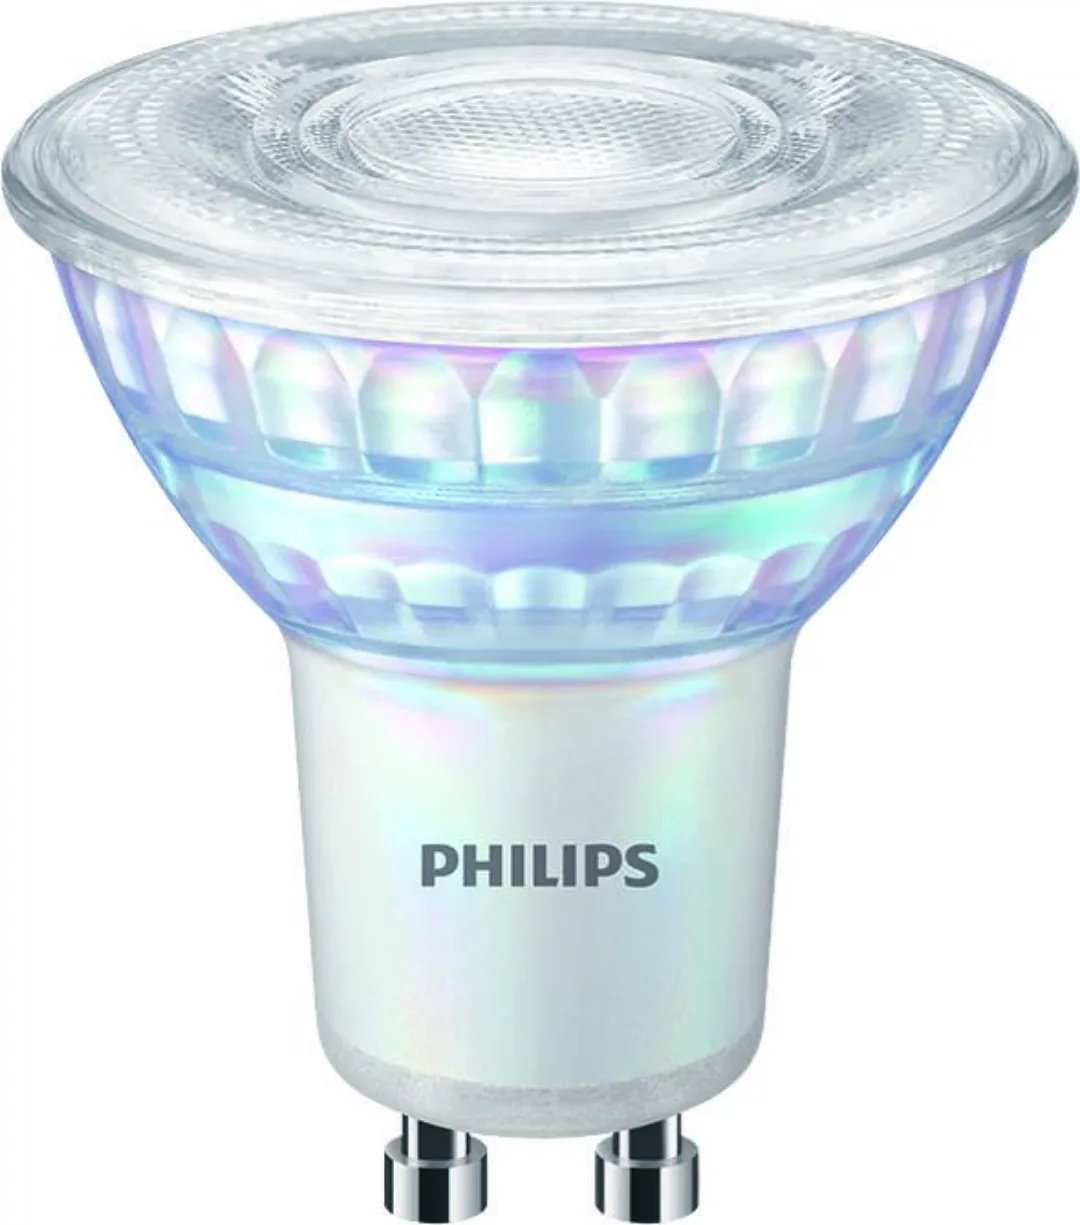 Philips Lighting LED-Reflektorlampe PAR16 GU10 2700K dimm MASLEDspot #66271 günstig online kaufen